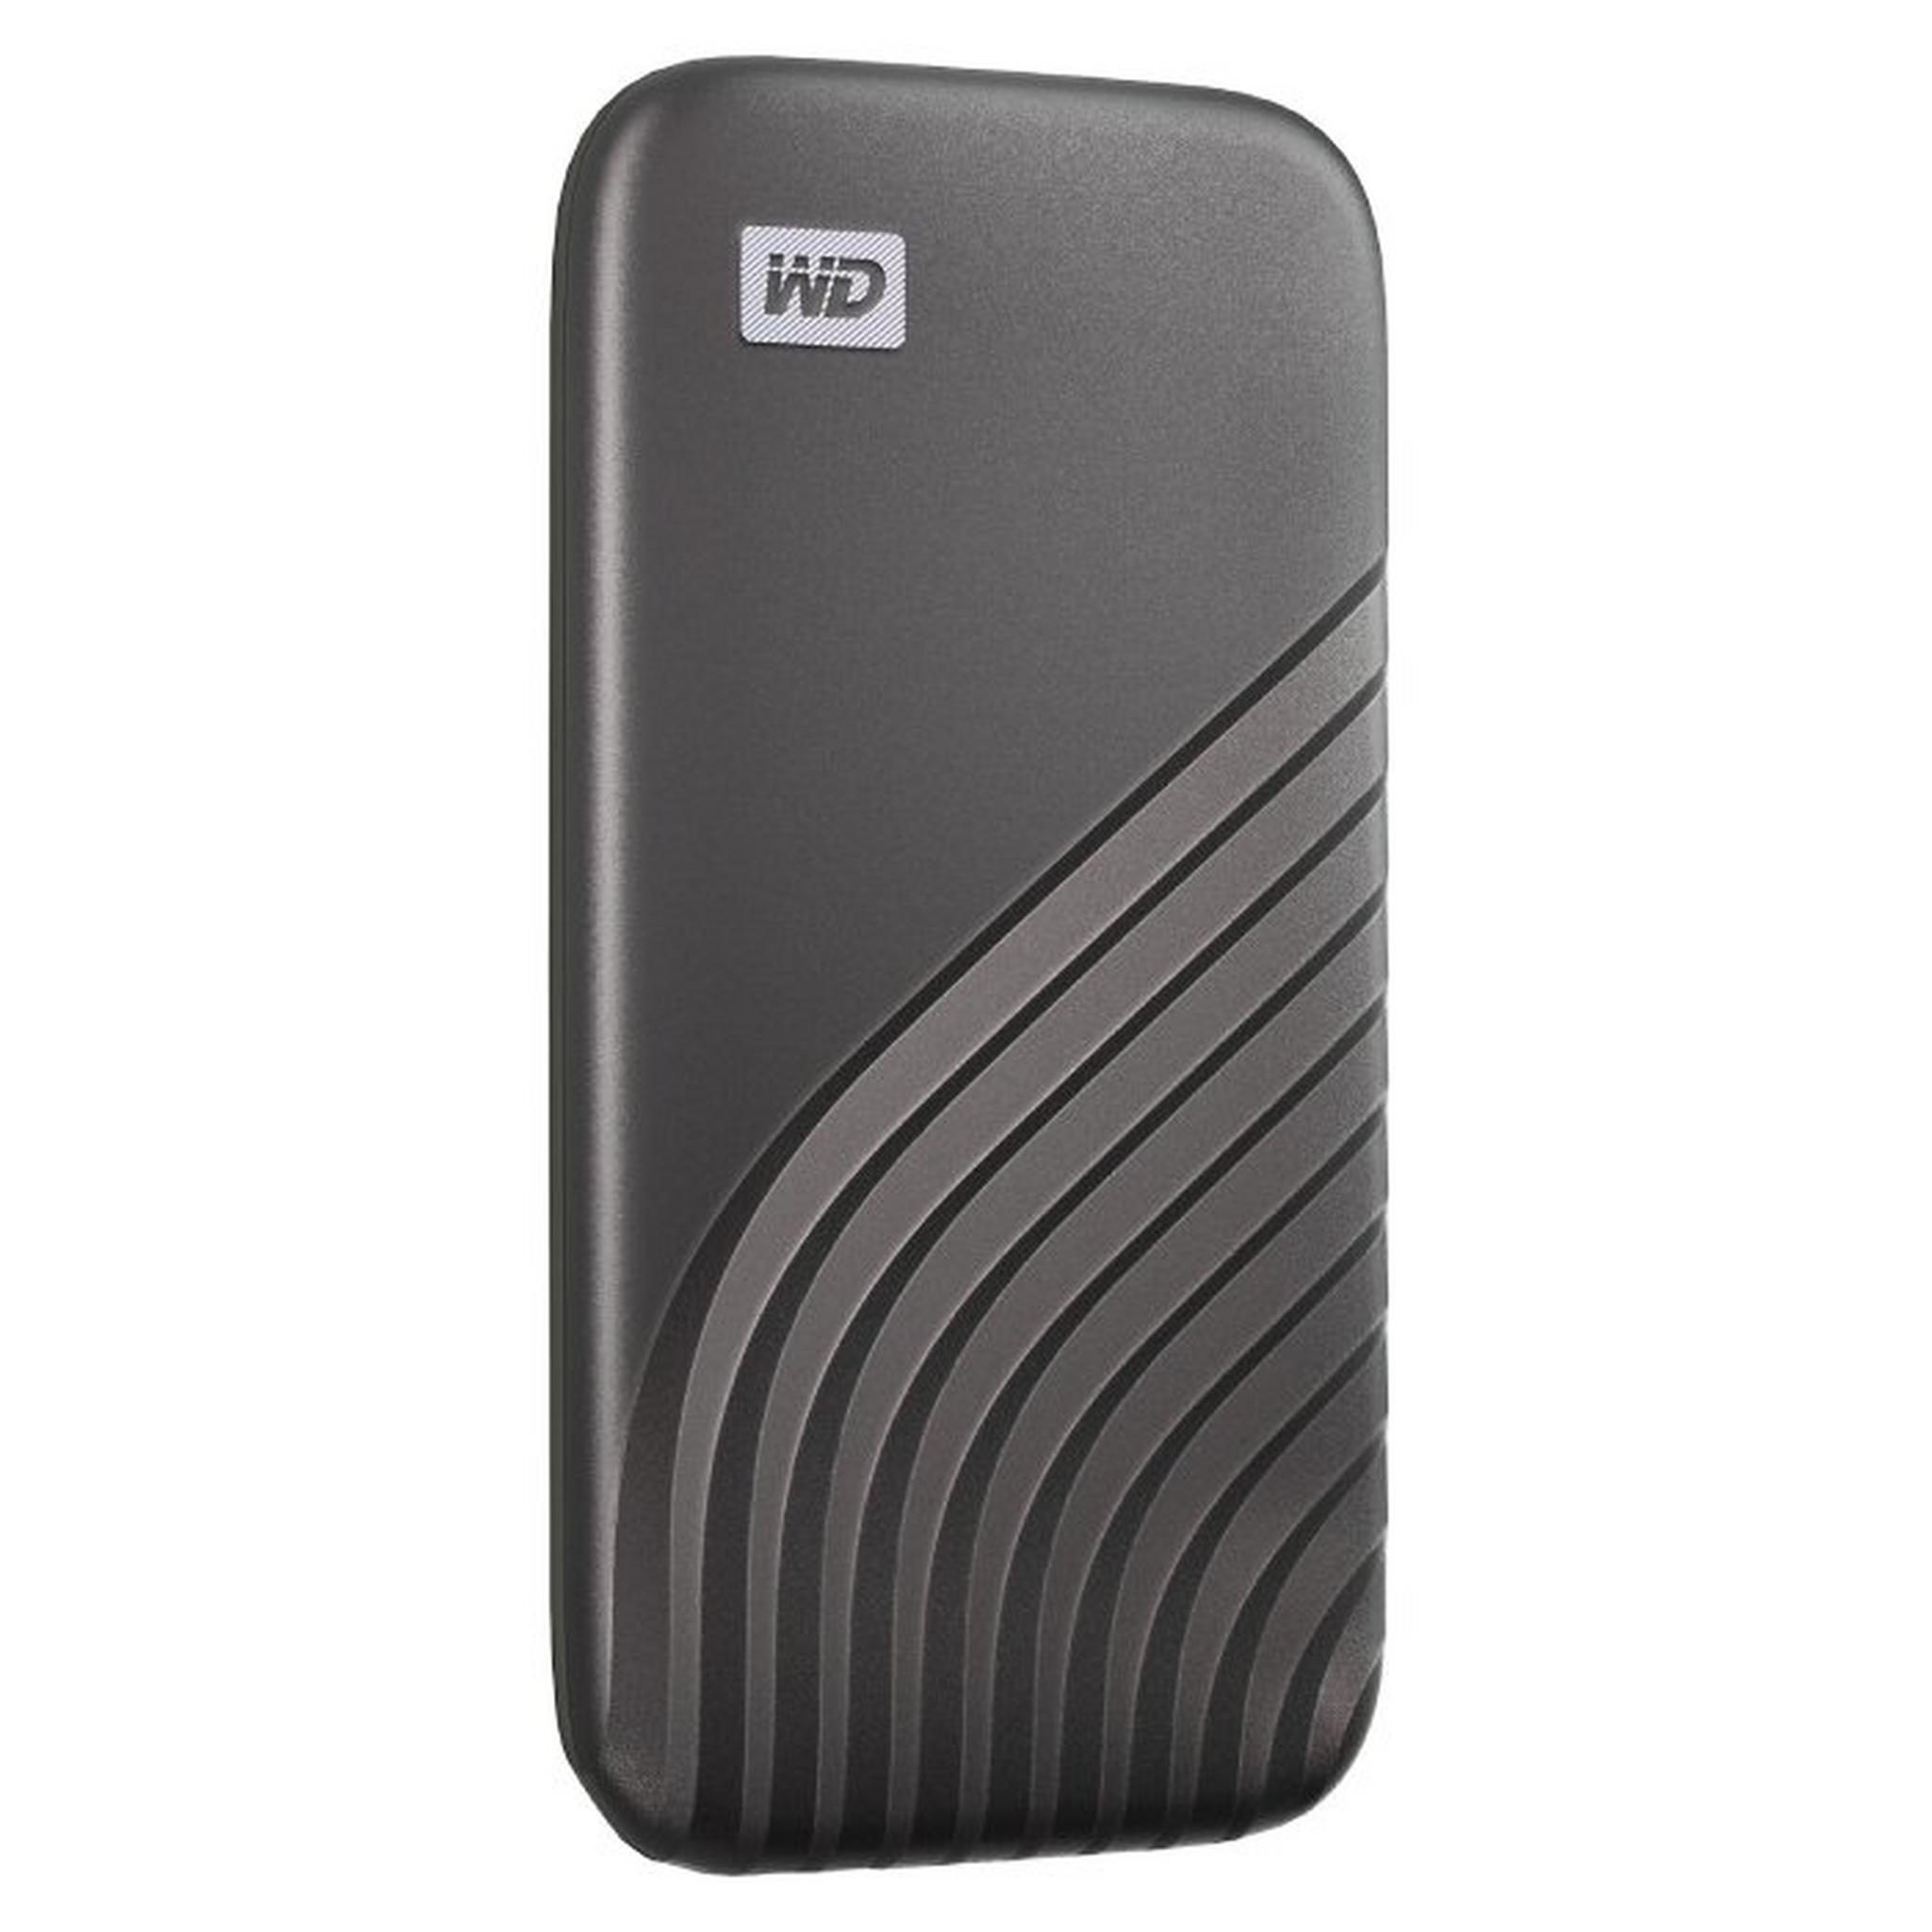 WD 4TB My Passport Portable External Hard Drive SSD (WDBAGF0040BGY-WESN) - Space Gray